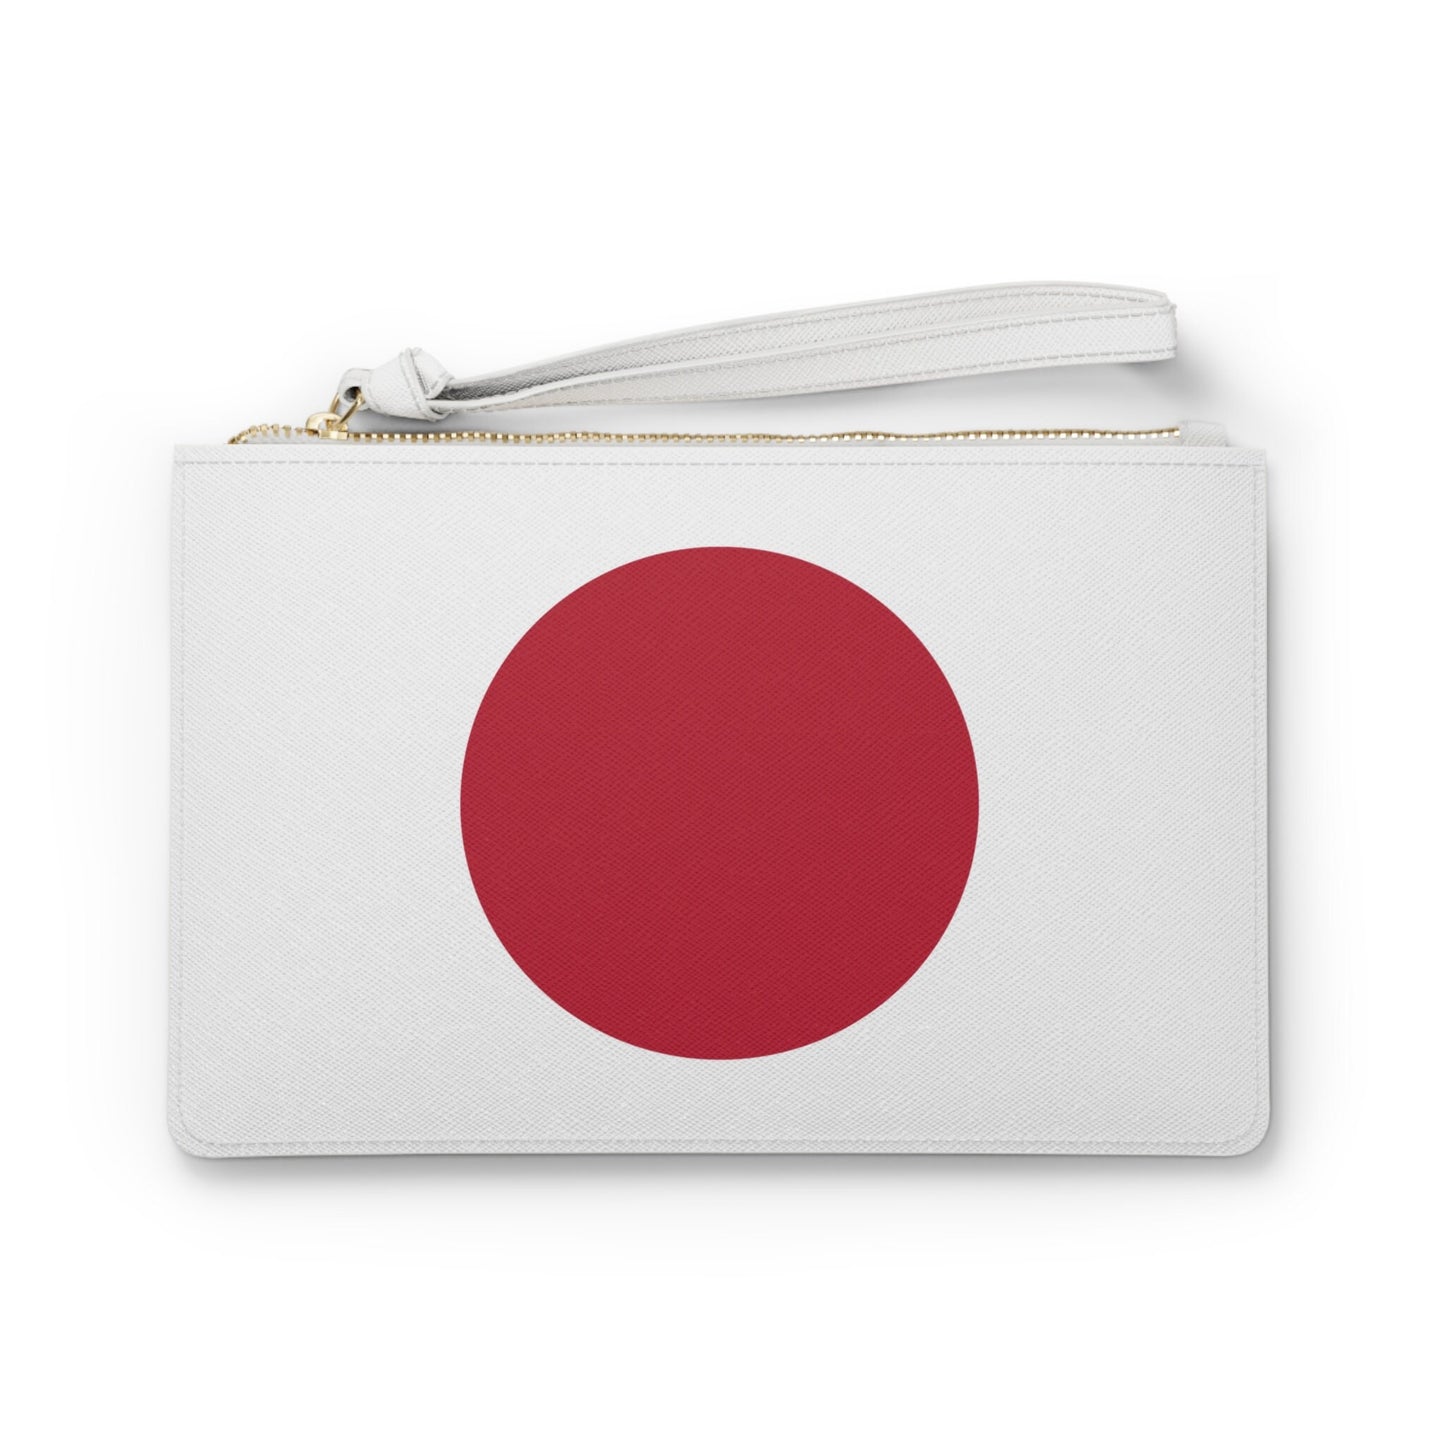 Japan Flag Clutch Bag